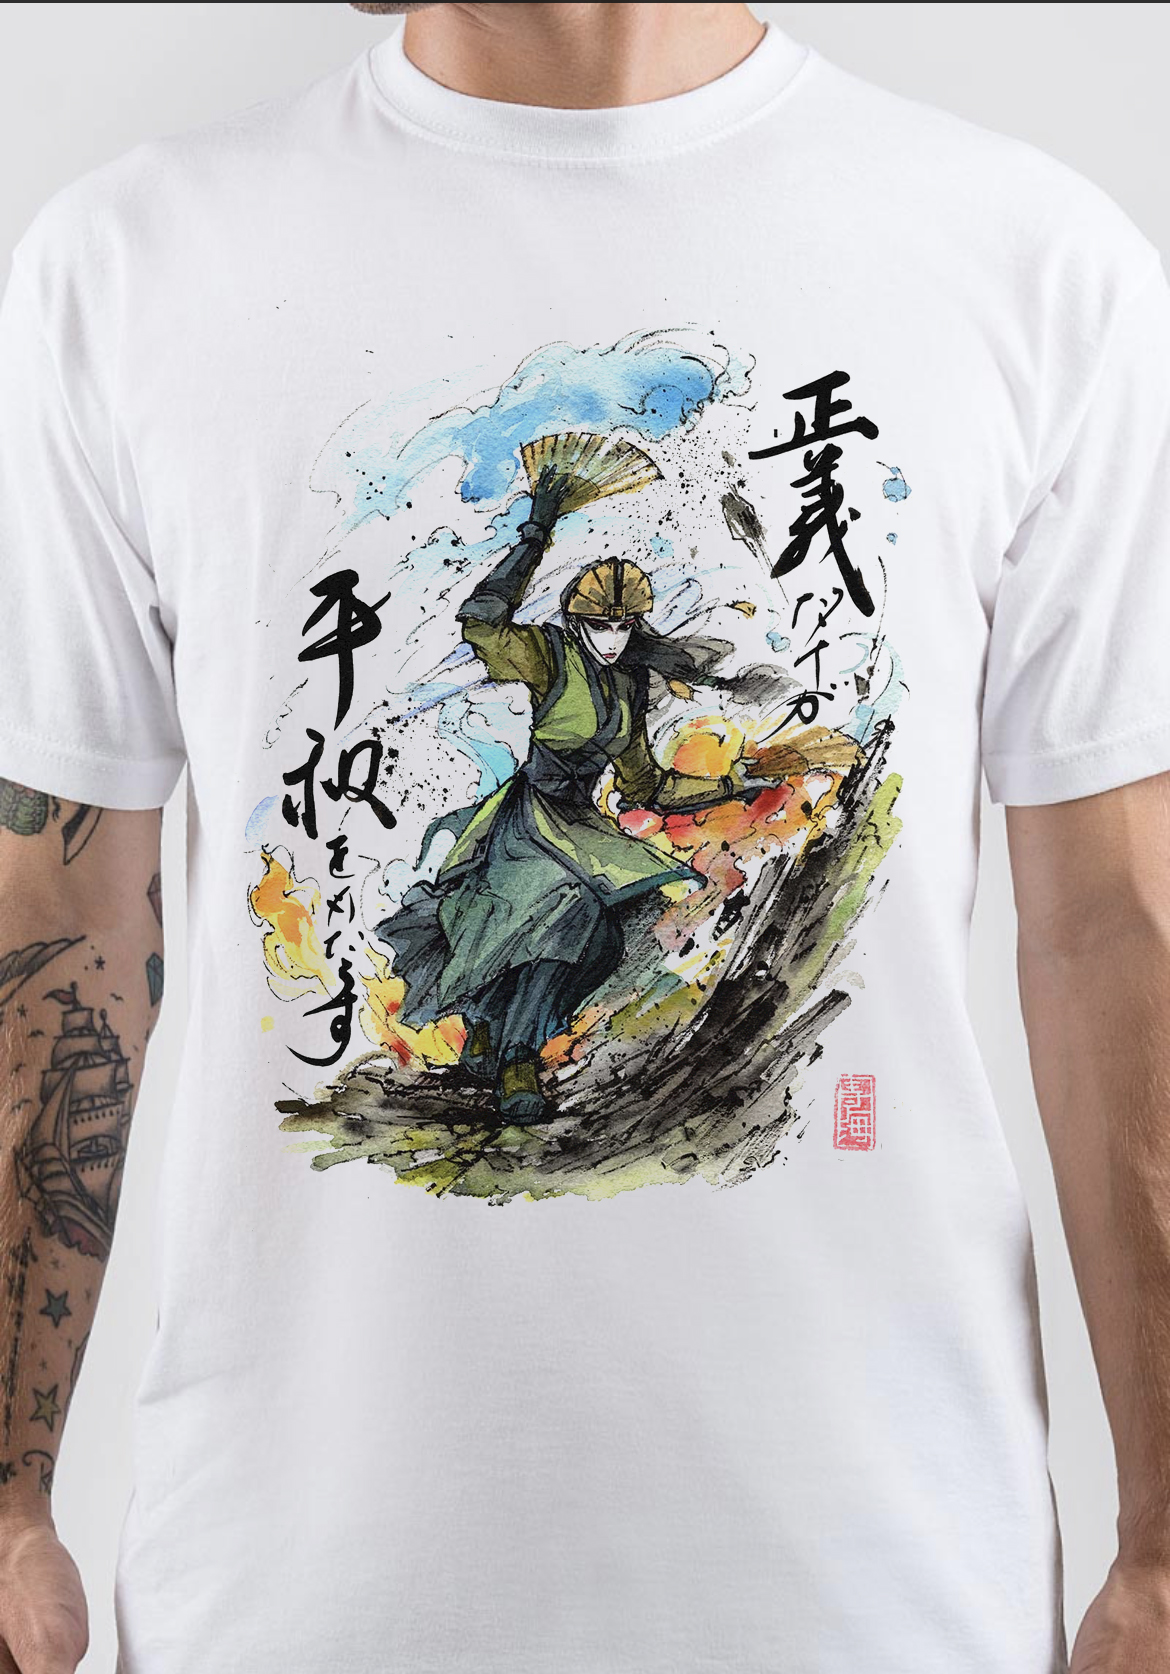 Avatar Kyoshi T-Shirt And Merchandise